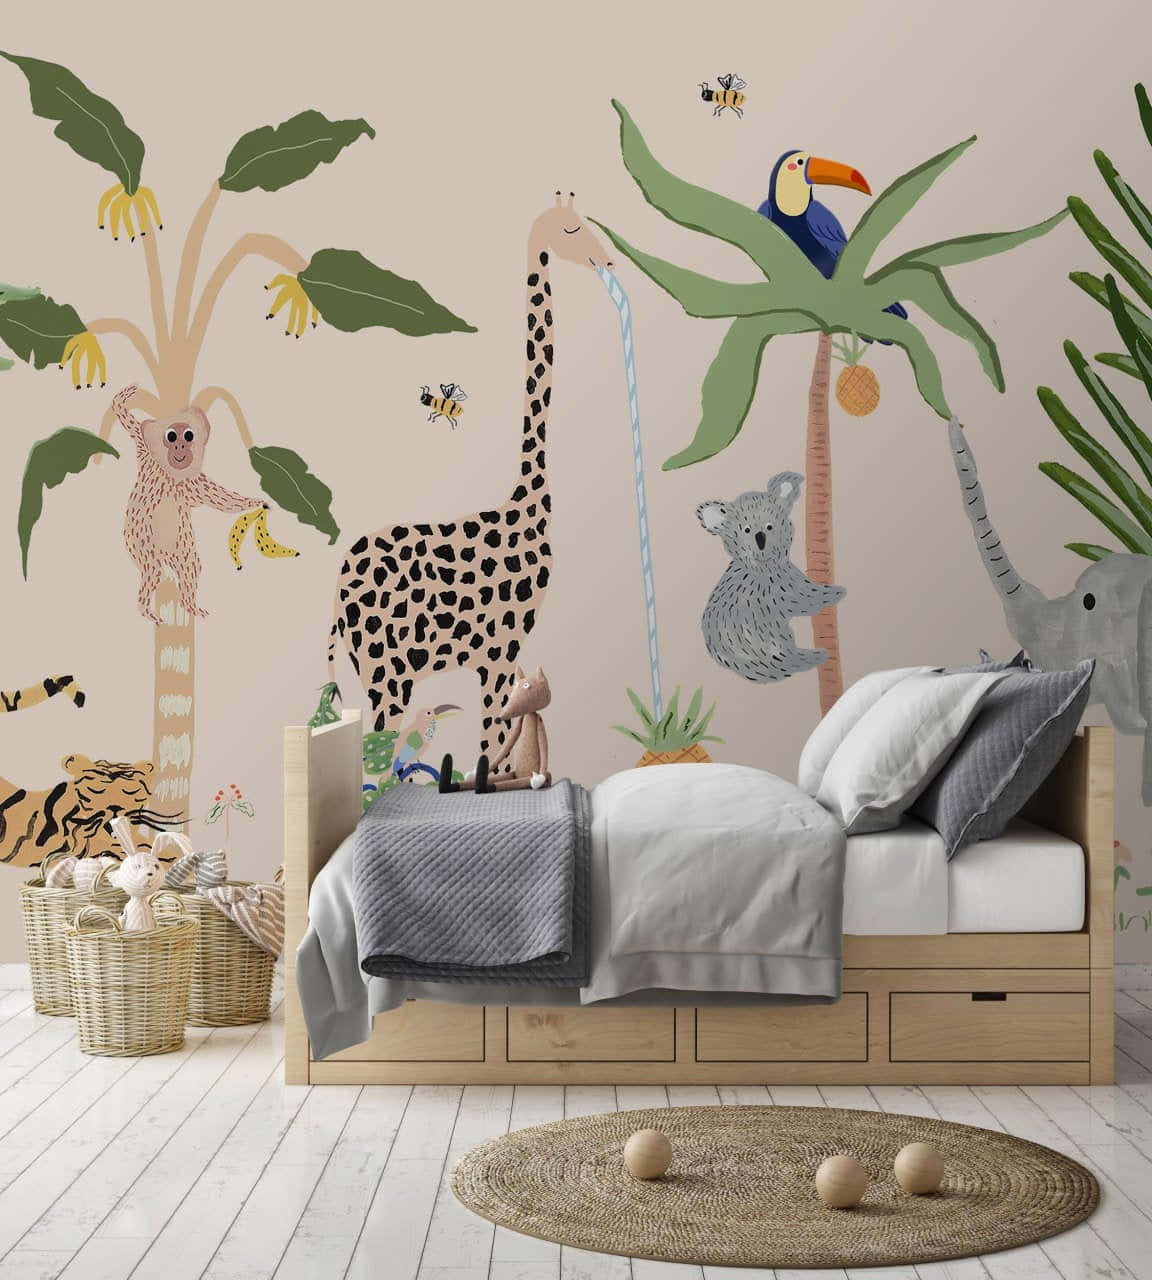 Interior Bedroom Design With Cute Giraffe Wallpaper